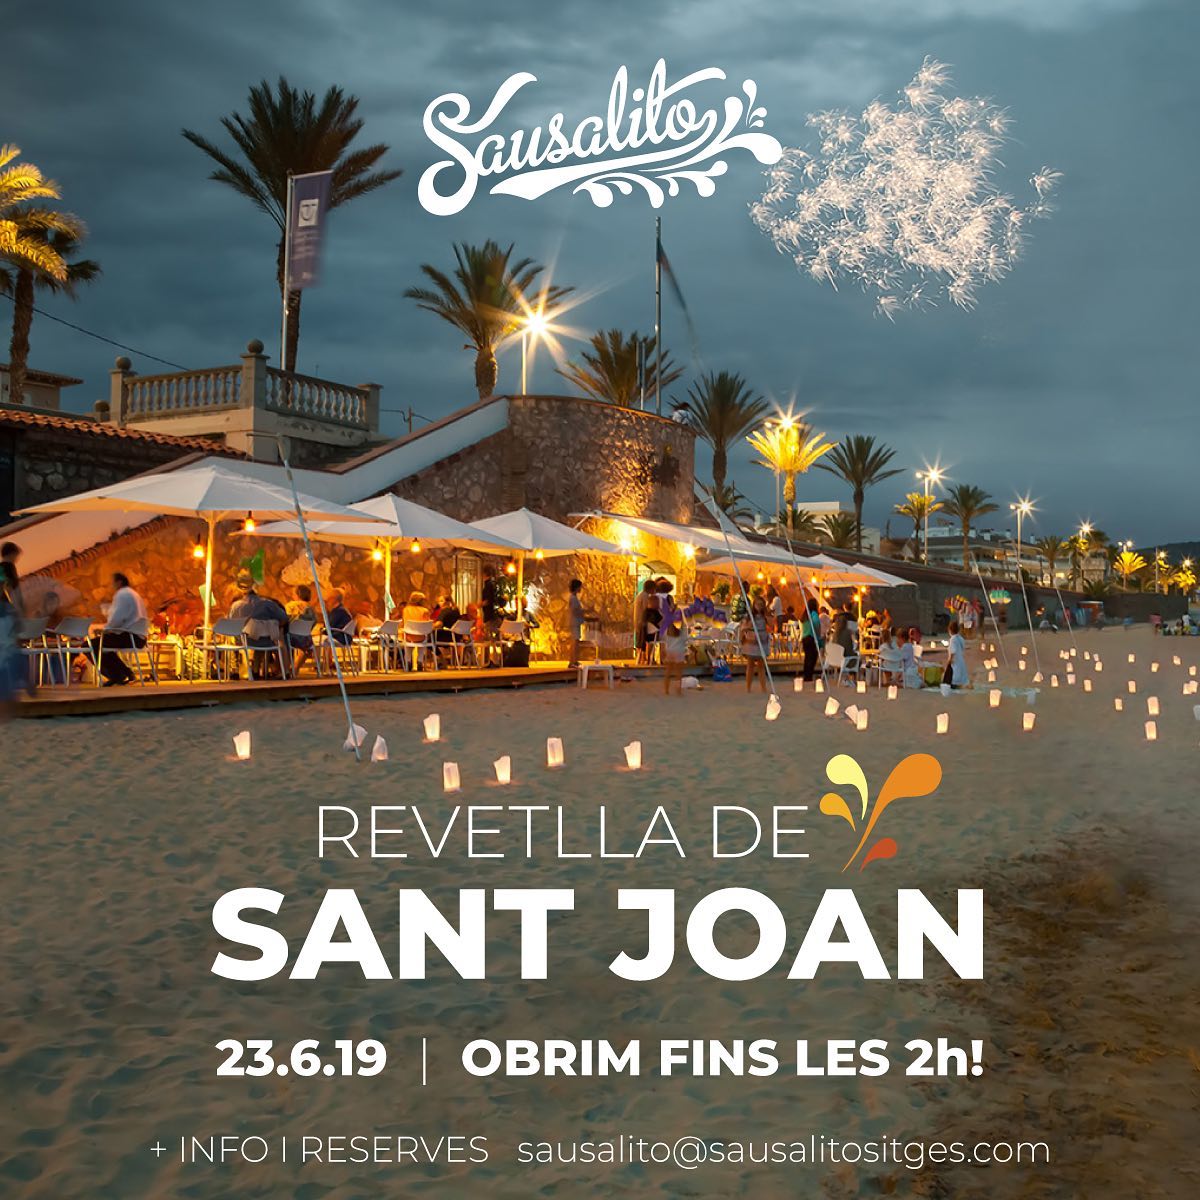 Revetlla de Sant Joan a Sausalito Sitges 2019